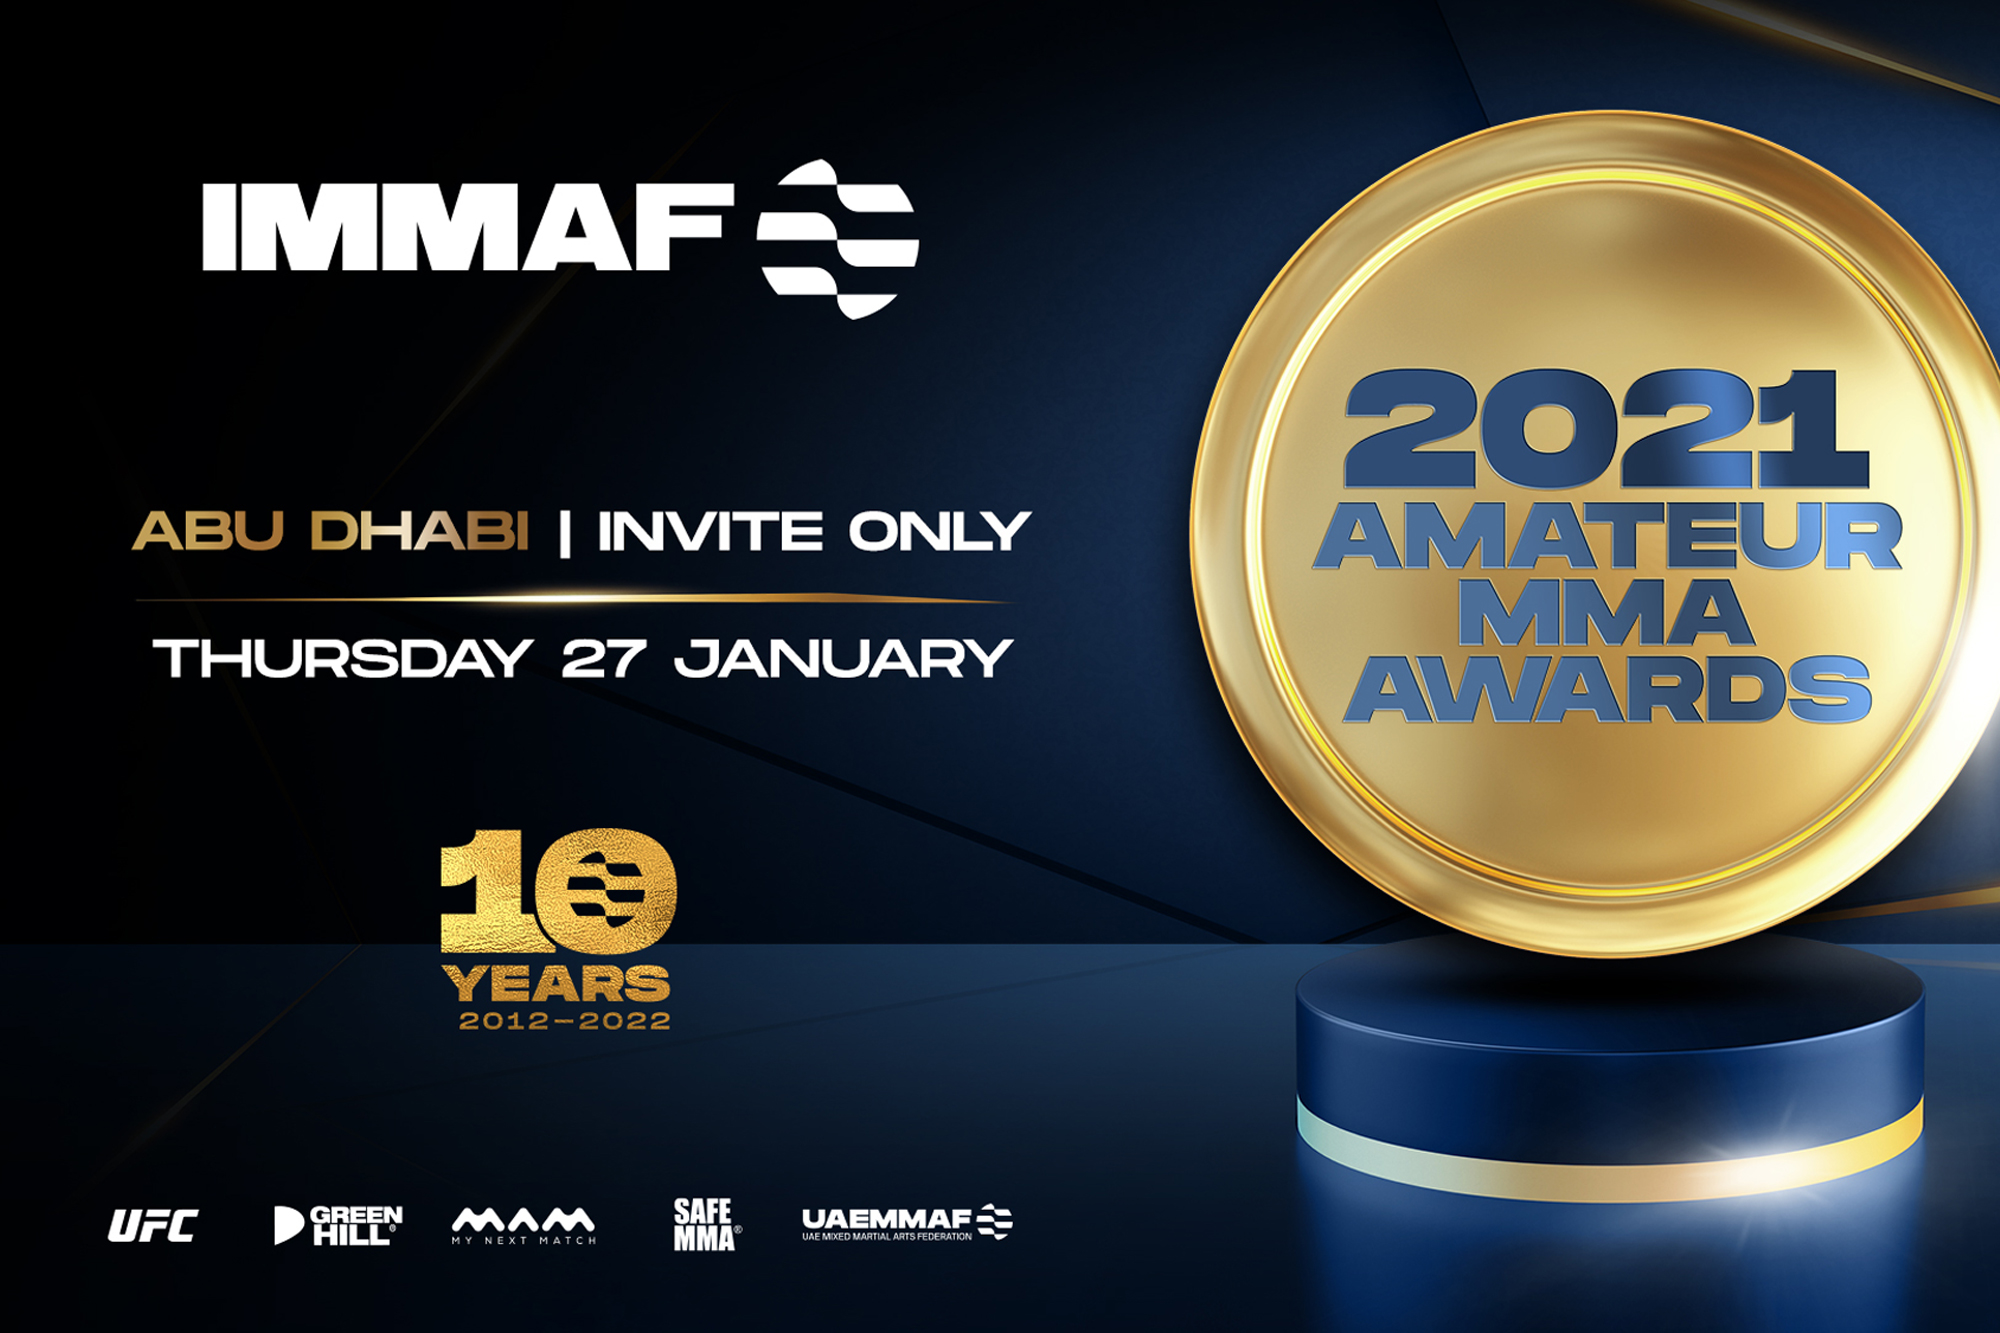 Abu Dhabi to host IMMAF Amateur MMA Awards 2021